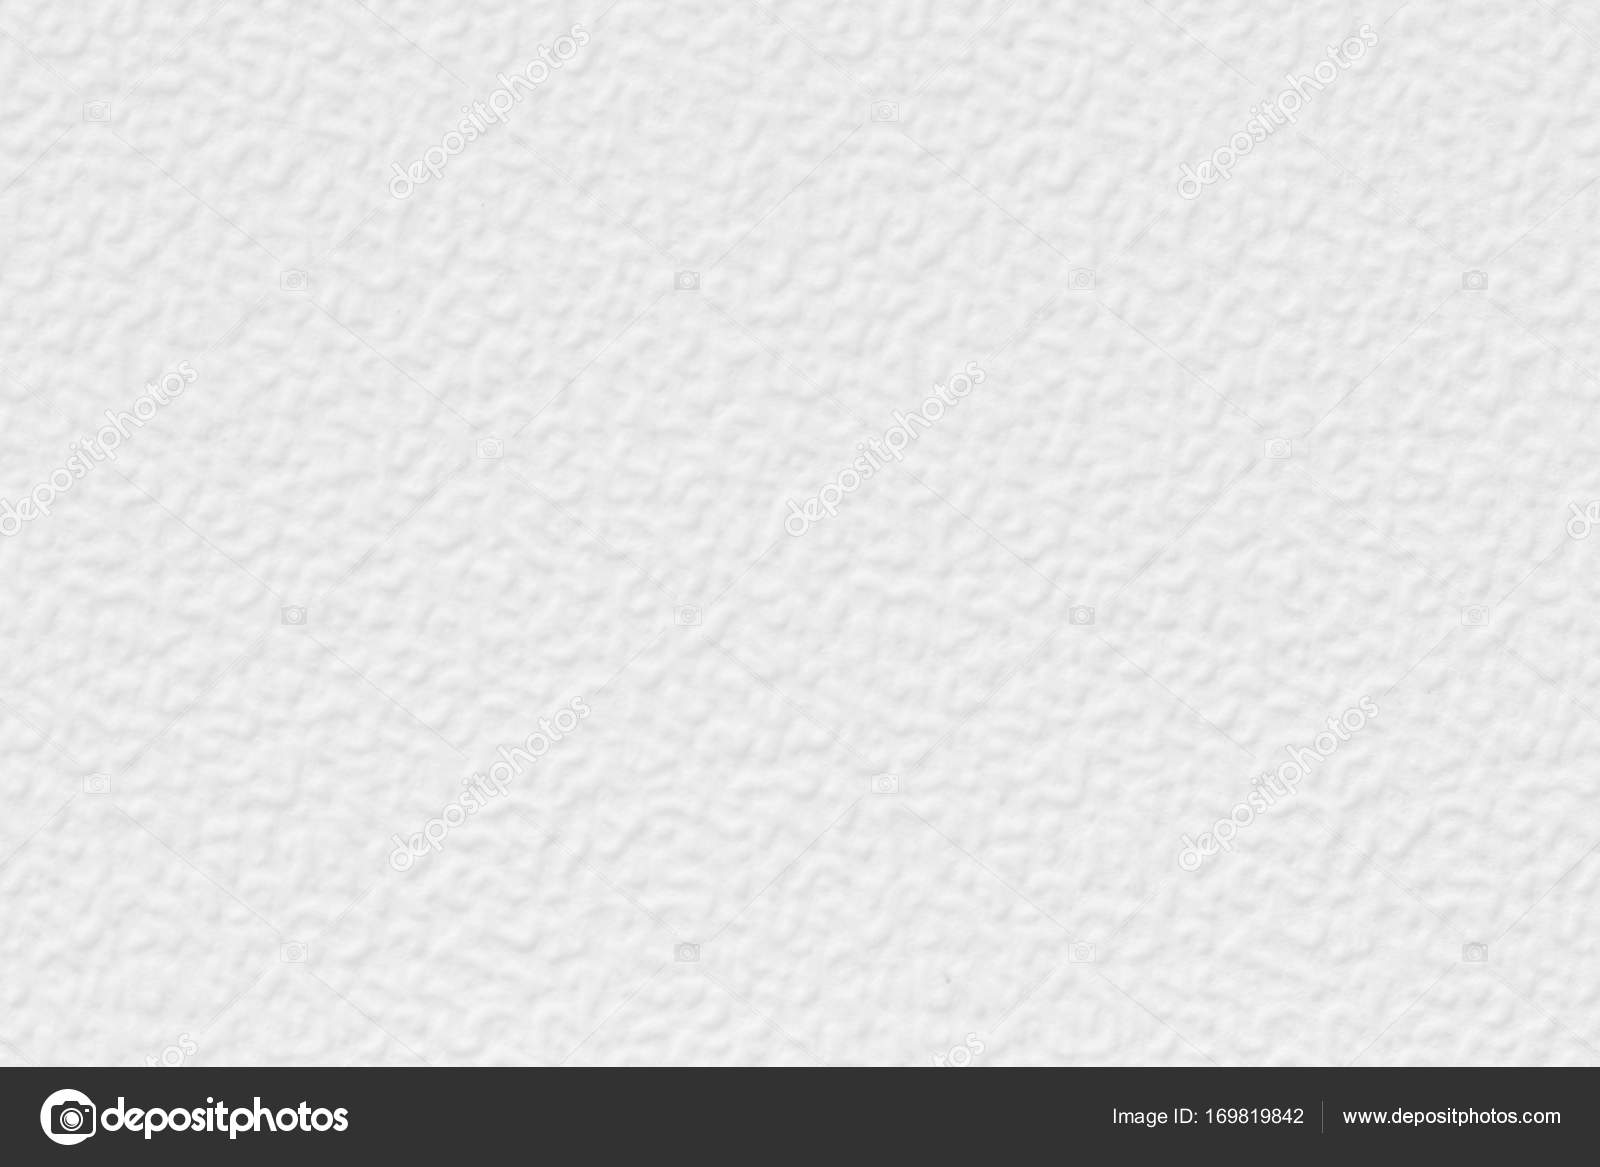 White paper background, rough pattern stationery texture. Stock Photo by  ©yamabikay 169819842